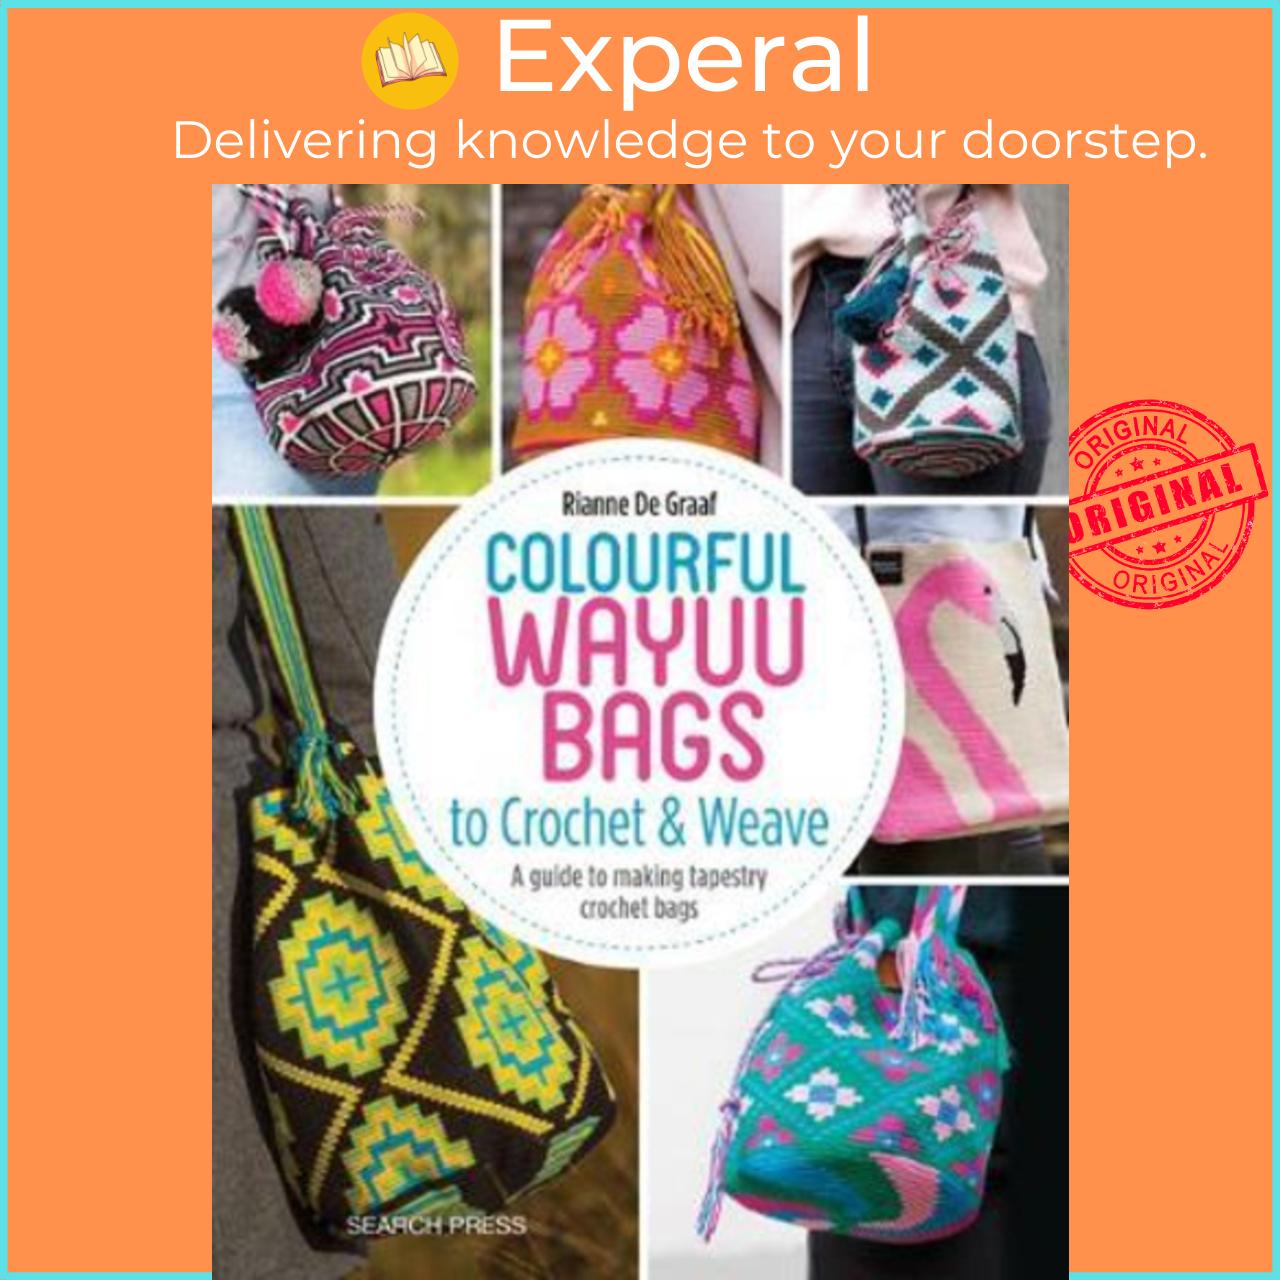 Hình ảnh Sách - Colourful Wayuu Bags to Crochet : A Guide to Making Tapestry Crochet B by Rianne de Graaf (UK edition, paperback)